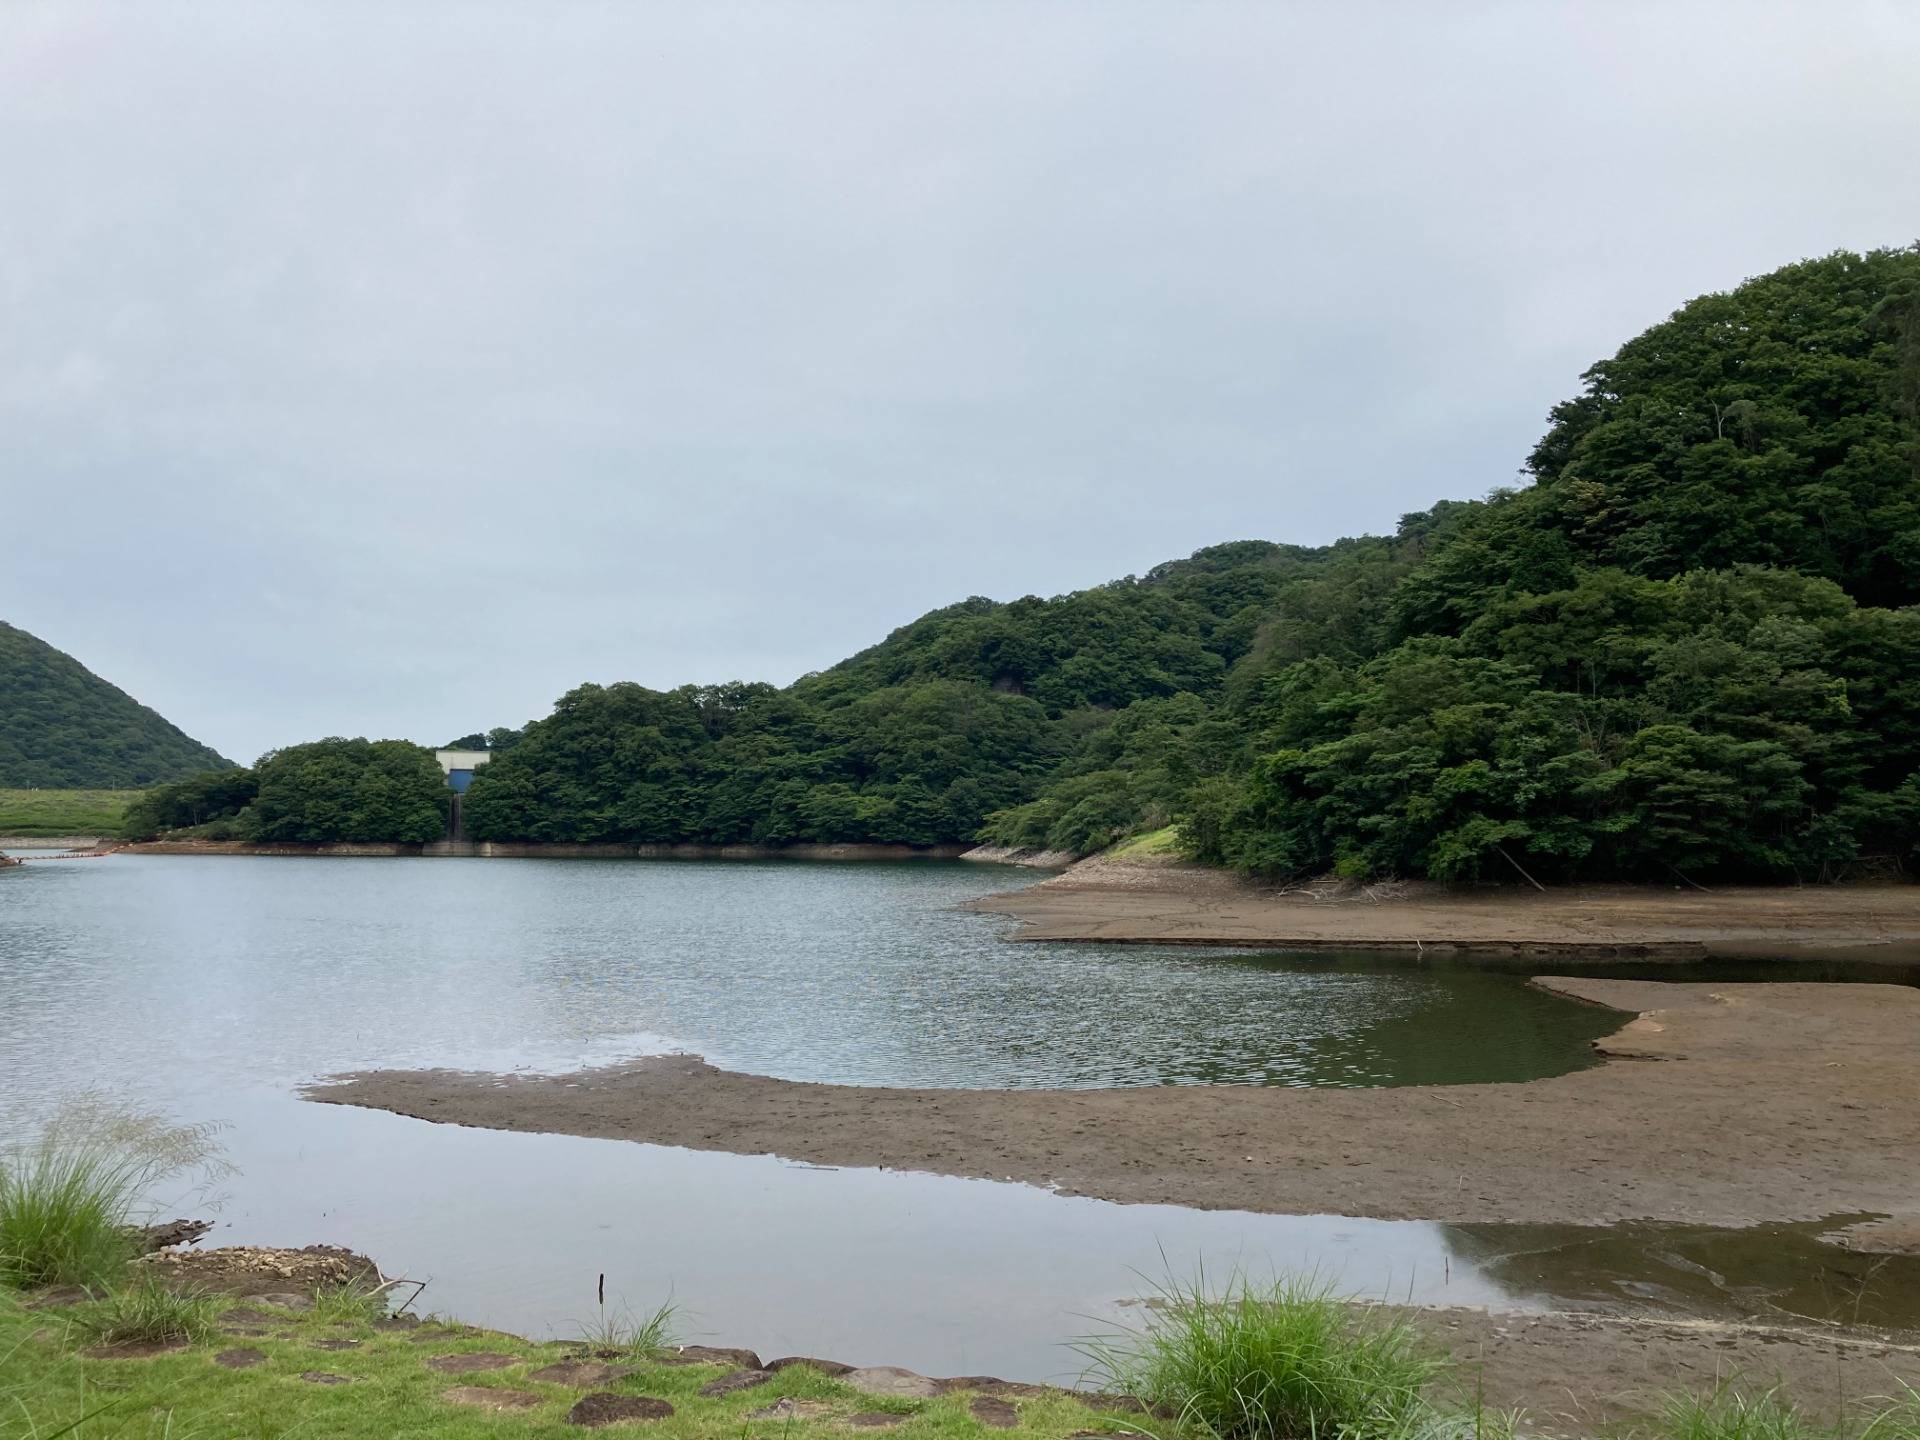 Walking around Matsukawa and Ippeki Lakes in the Izu Peninsula, Japan.